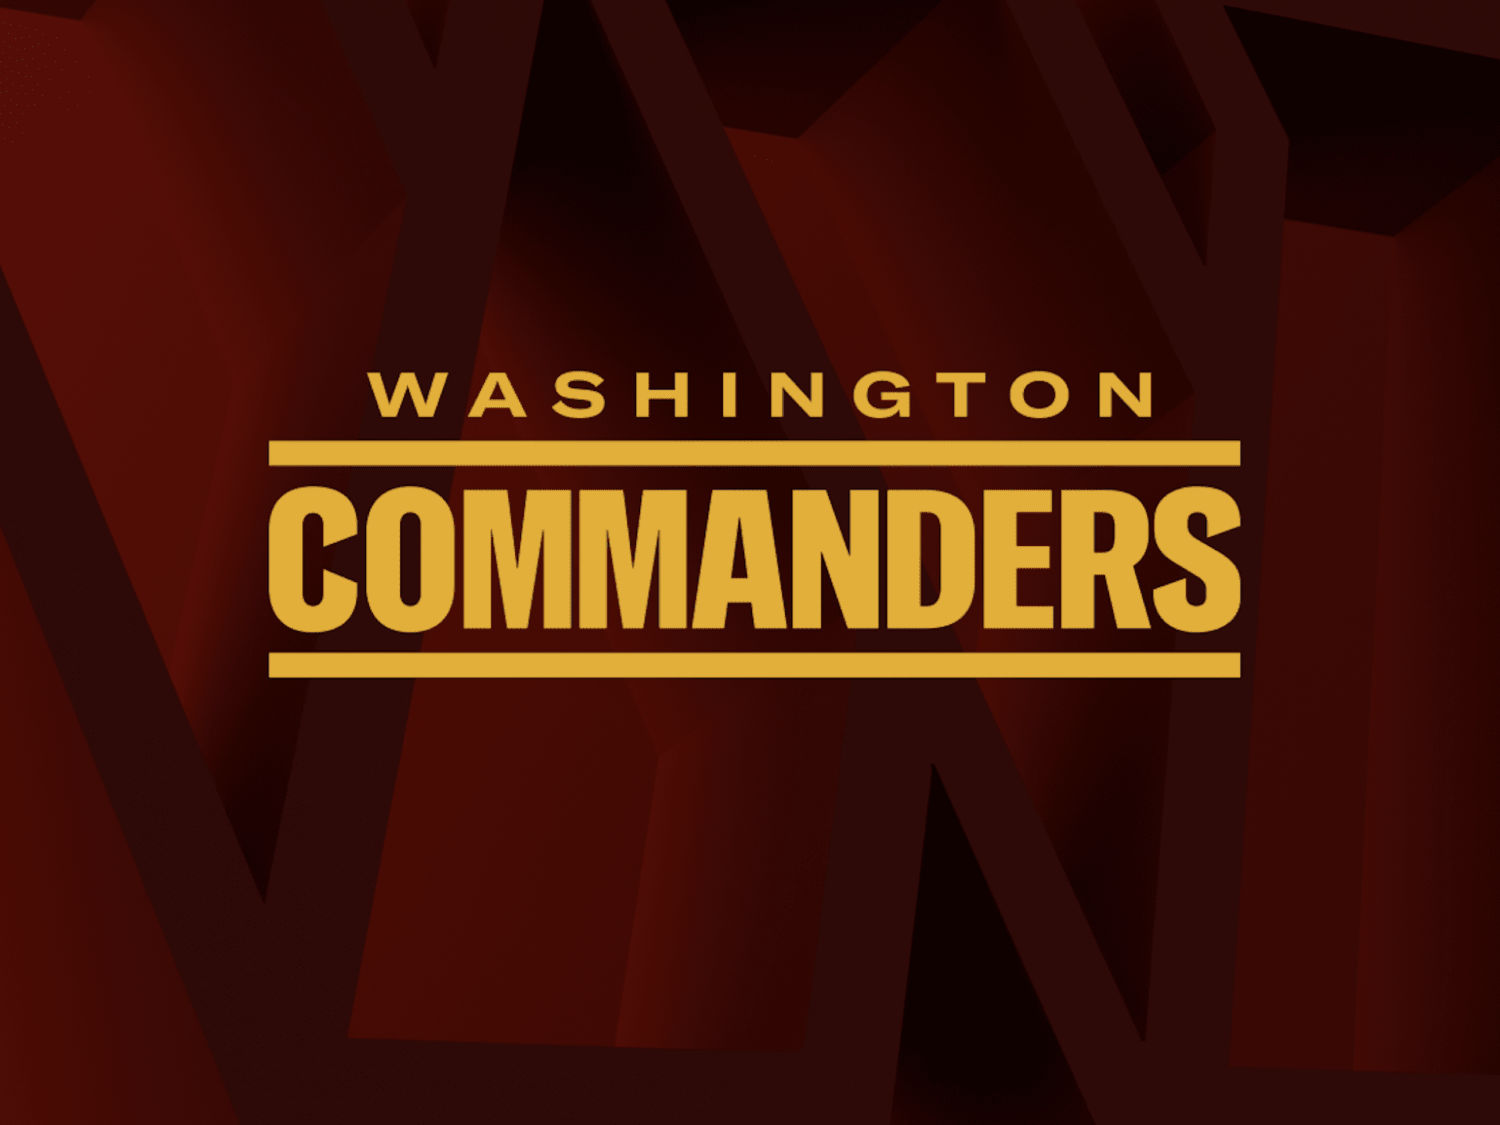 Washington Commanders Logo / Wortmarke